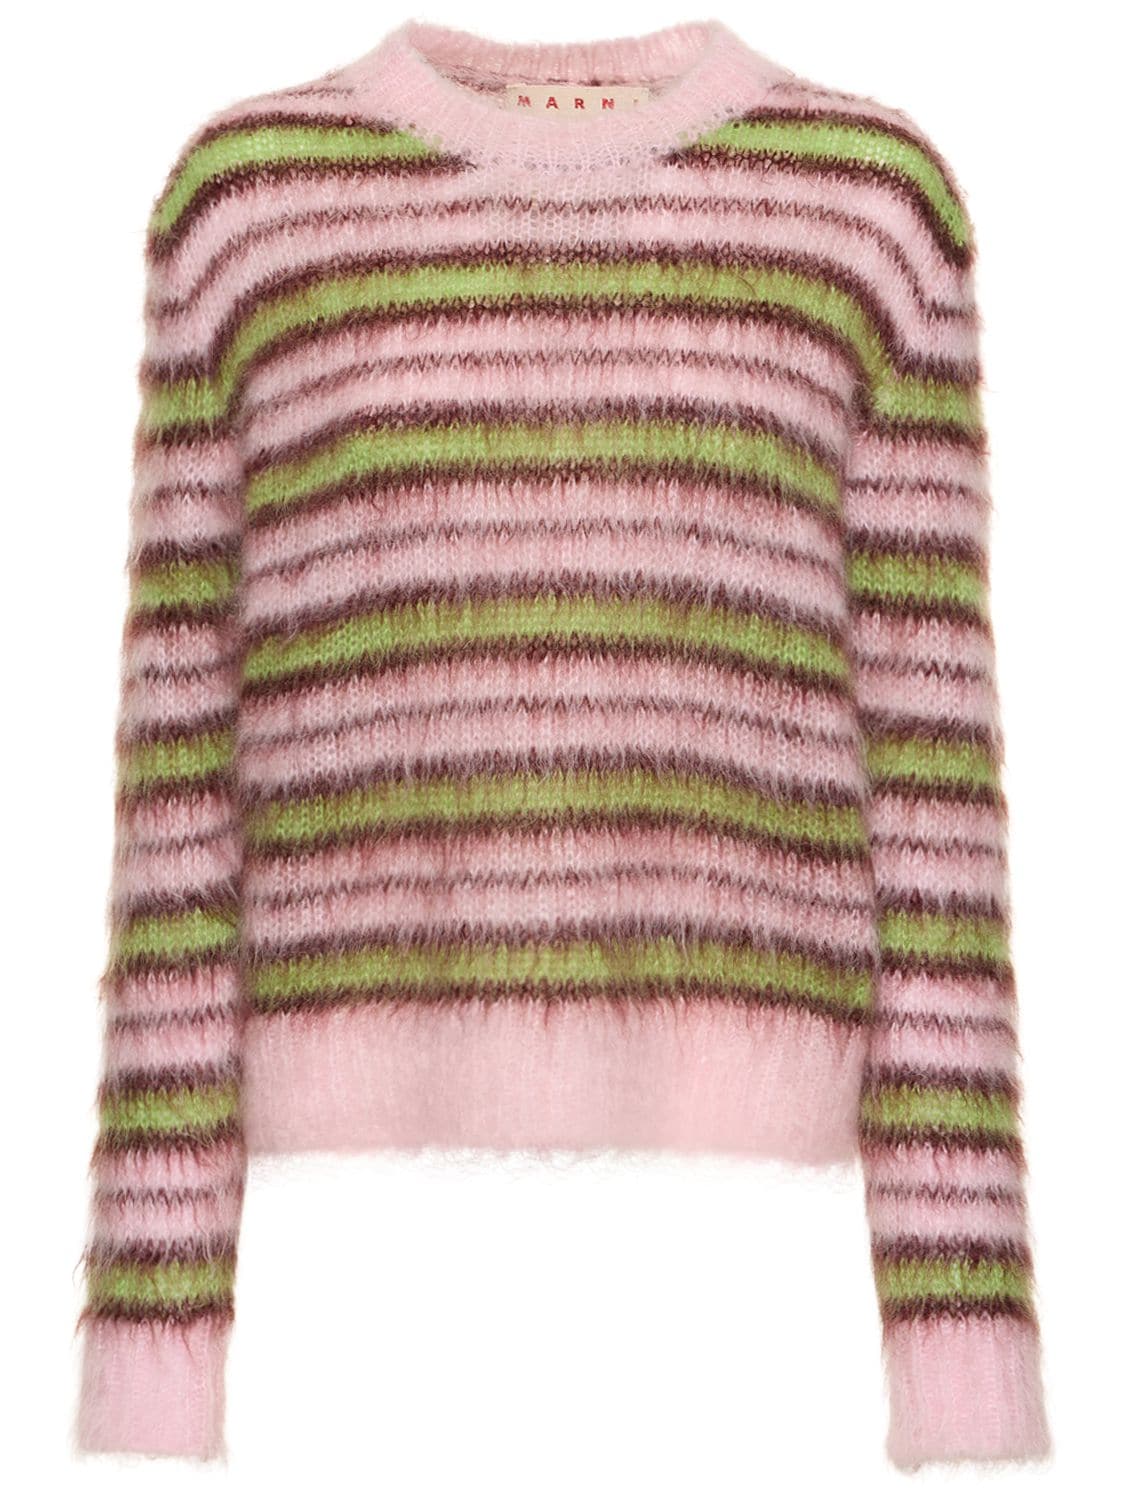 MARNI Striped Mohair Blend Crewneck Sweater